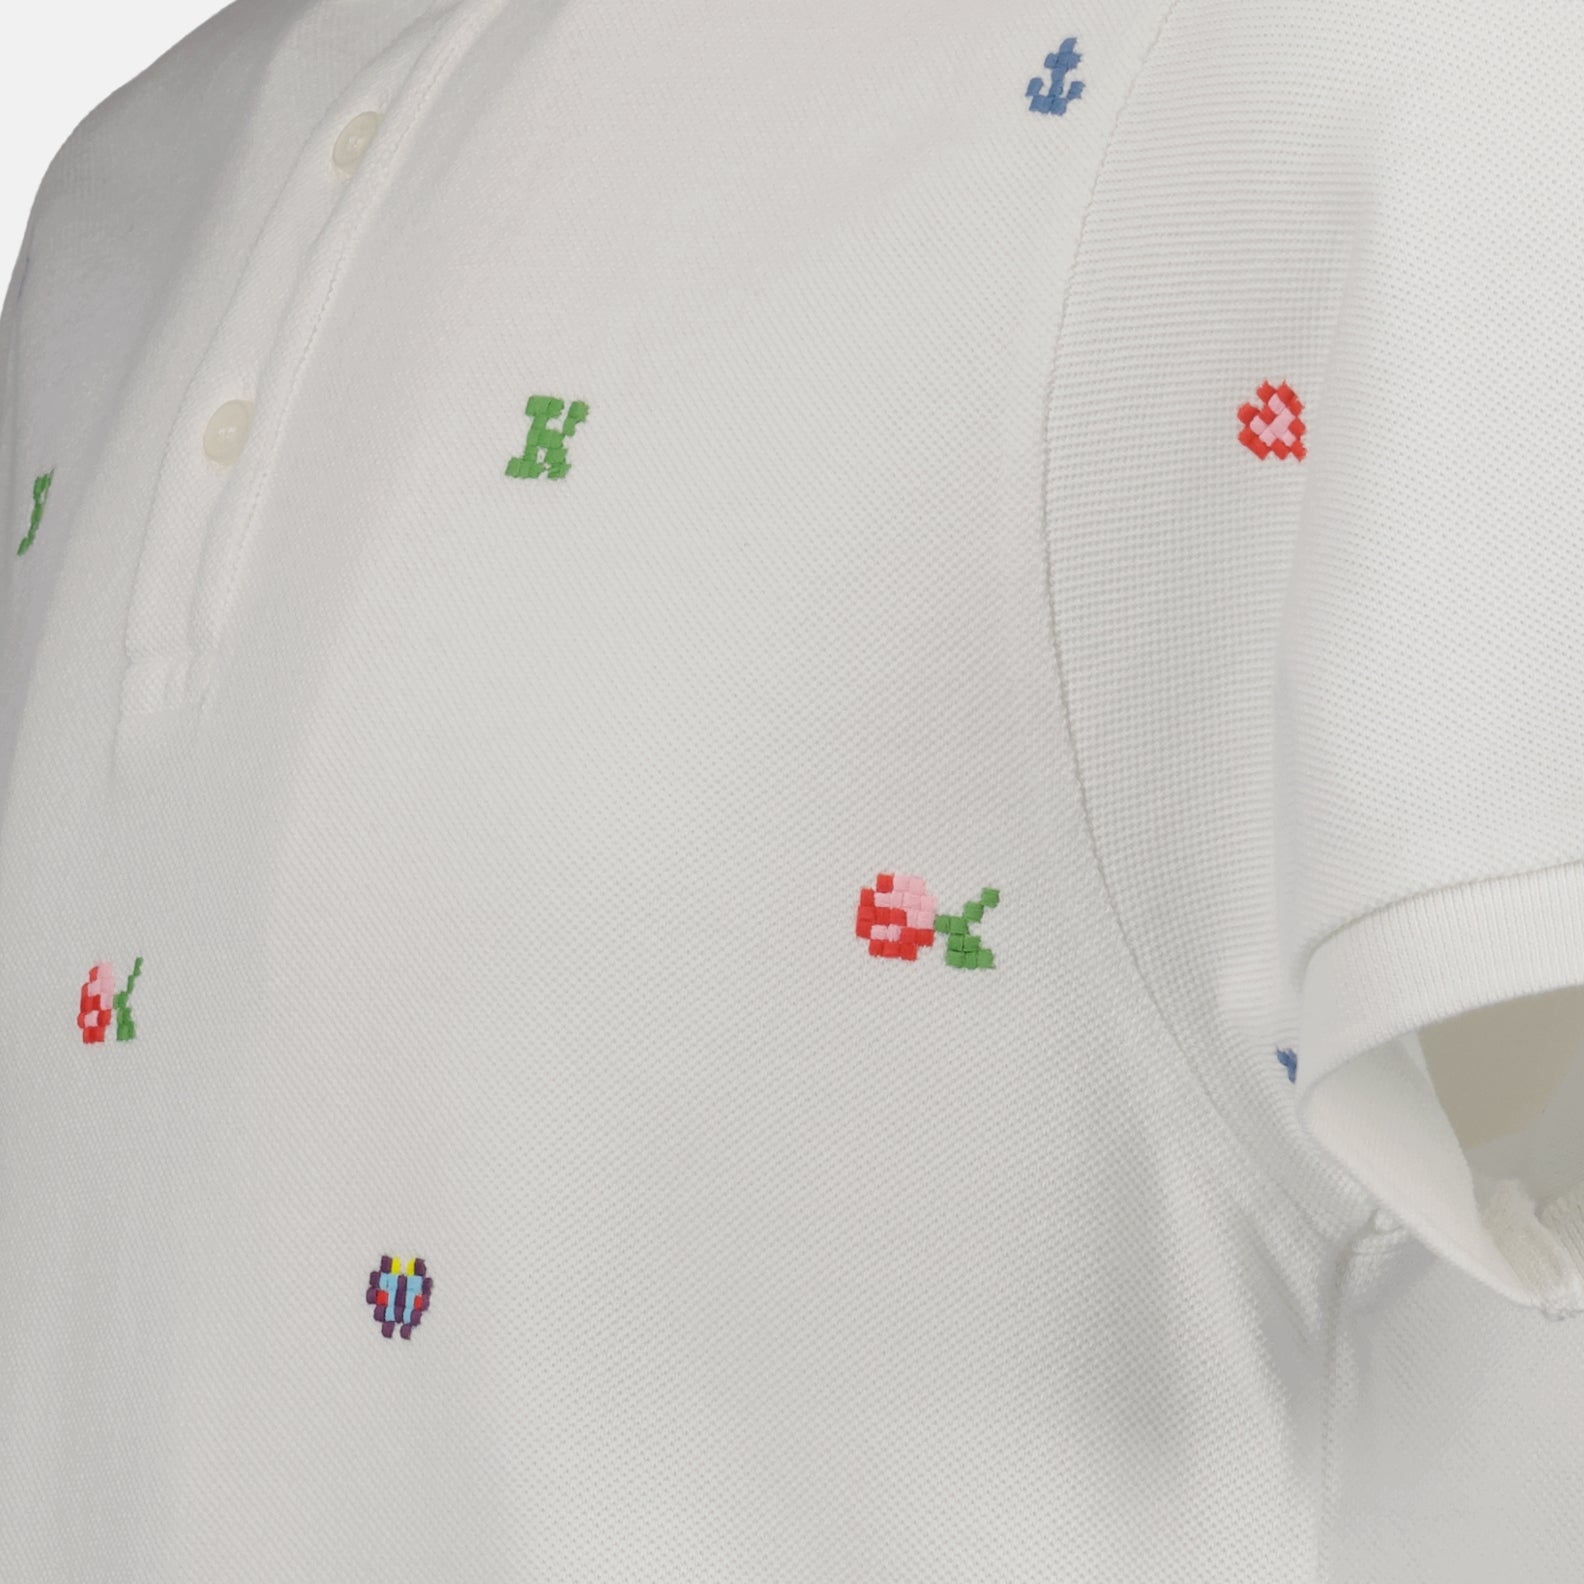 Kenzo Men's Pixel-Embroidered Slim Polo Shirt